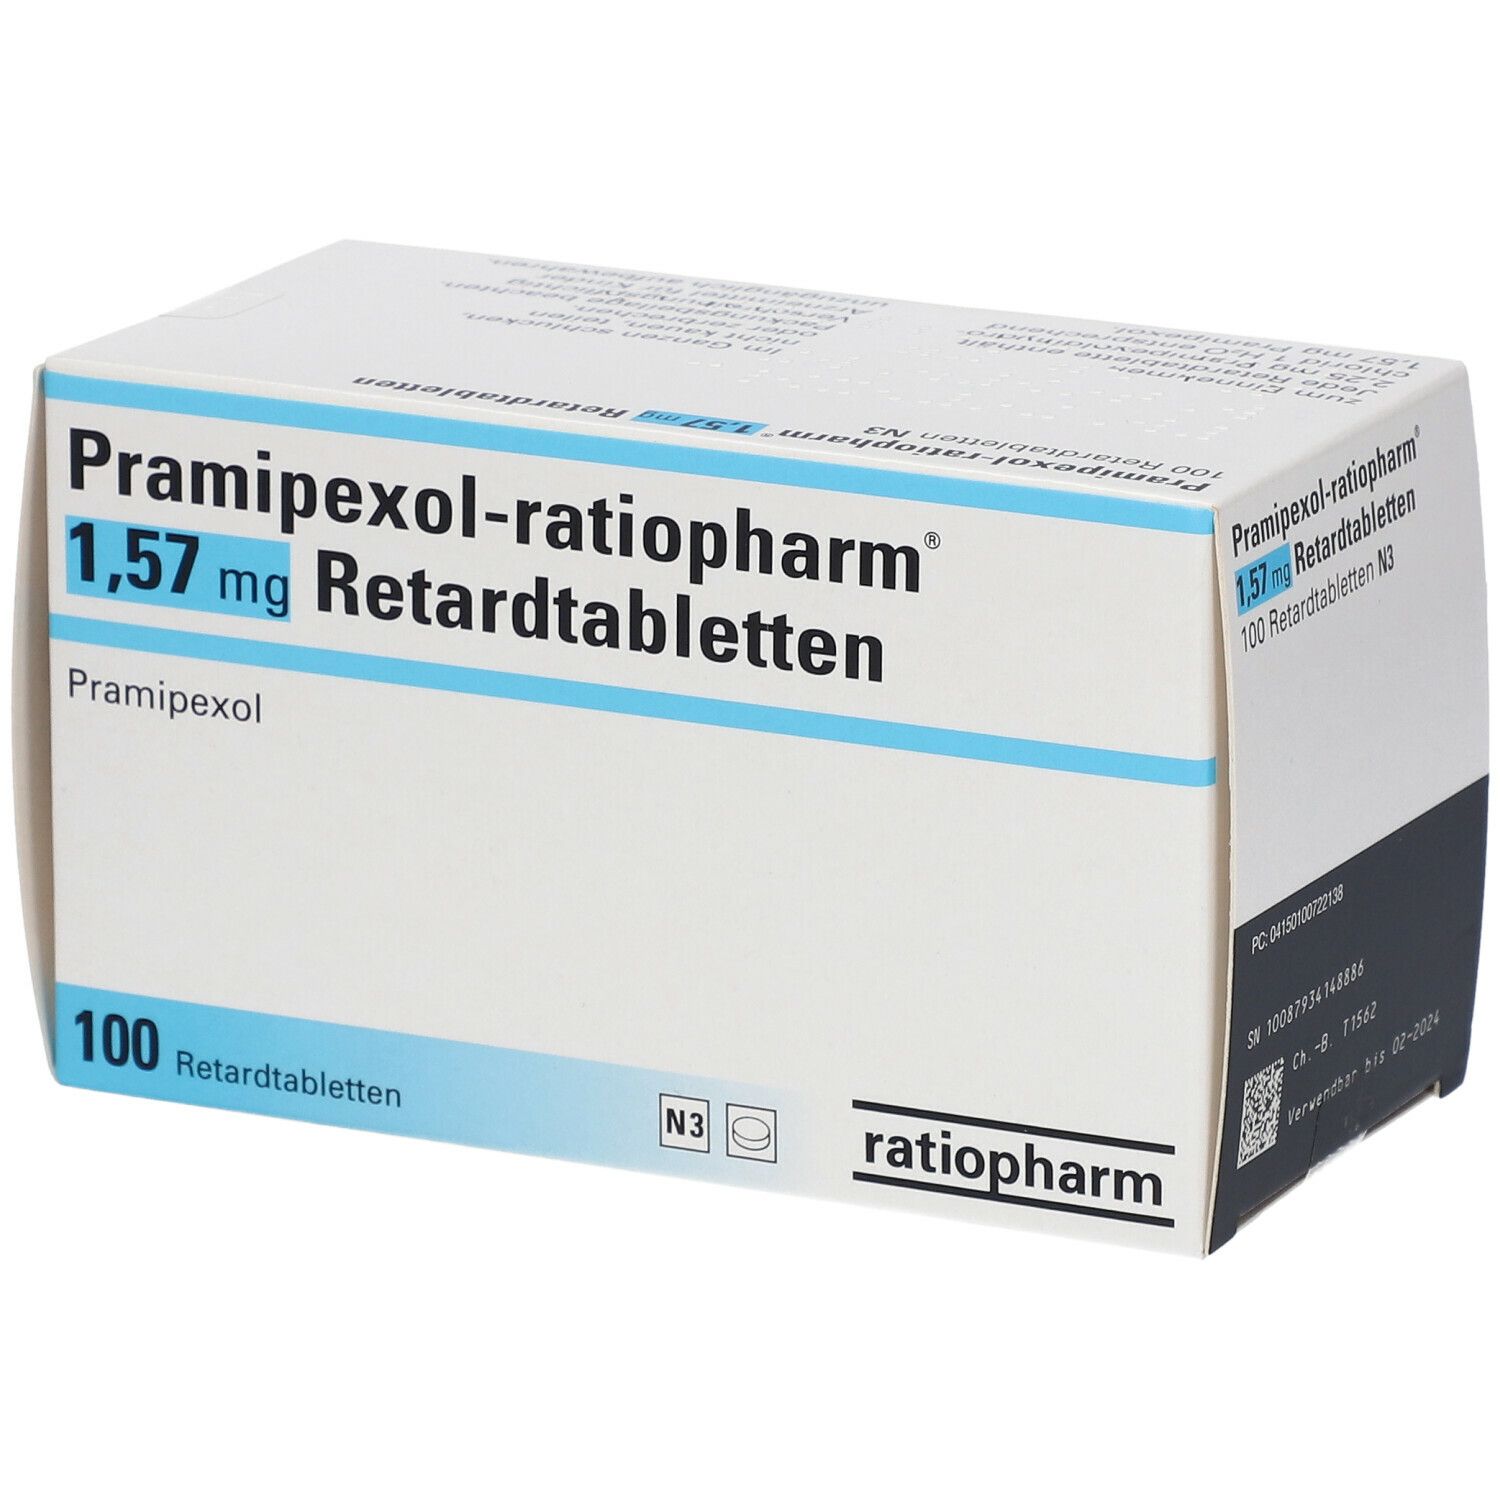 Pramipexol-ratiopharm® 1,57 mg